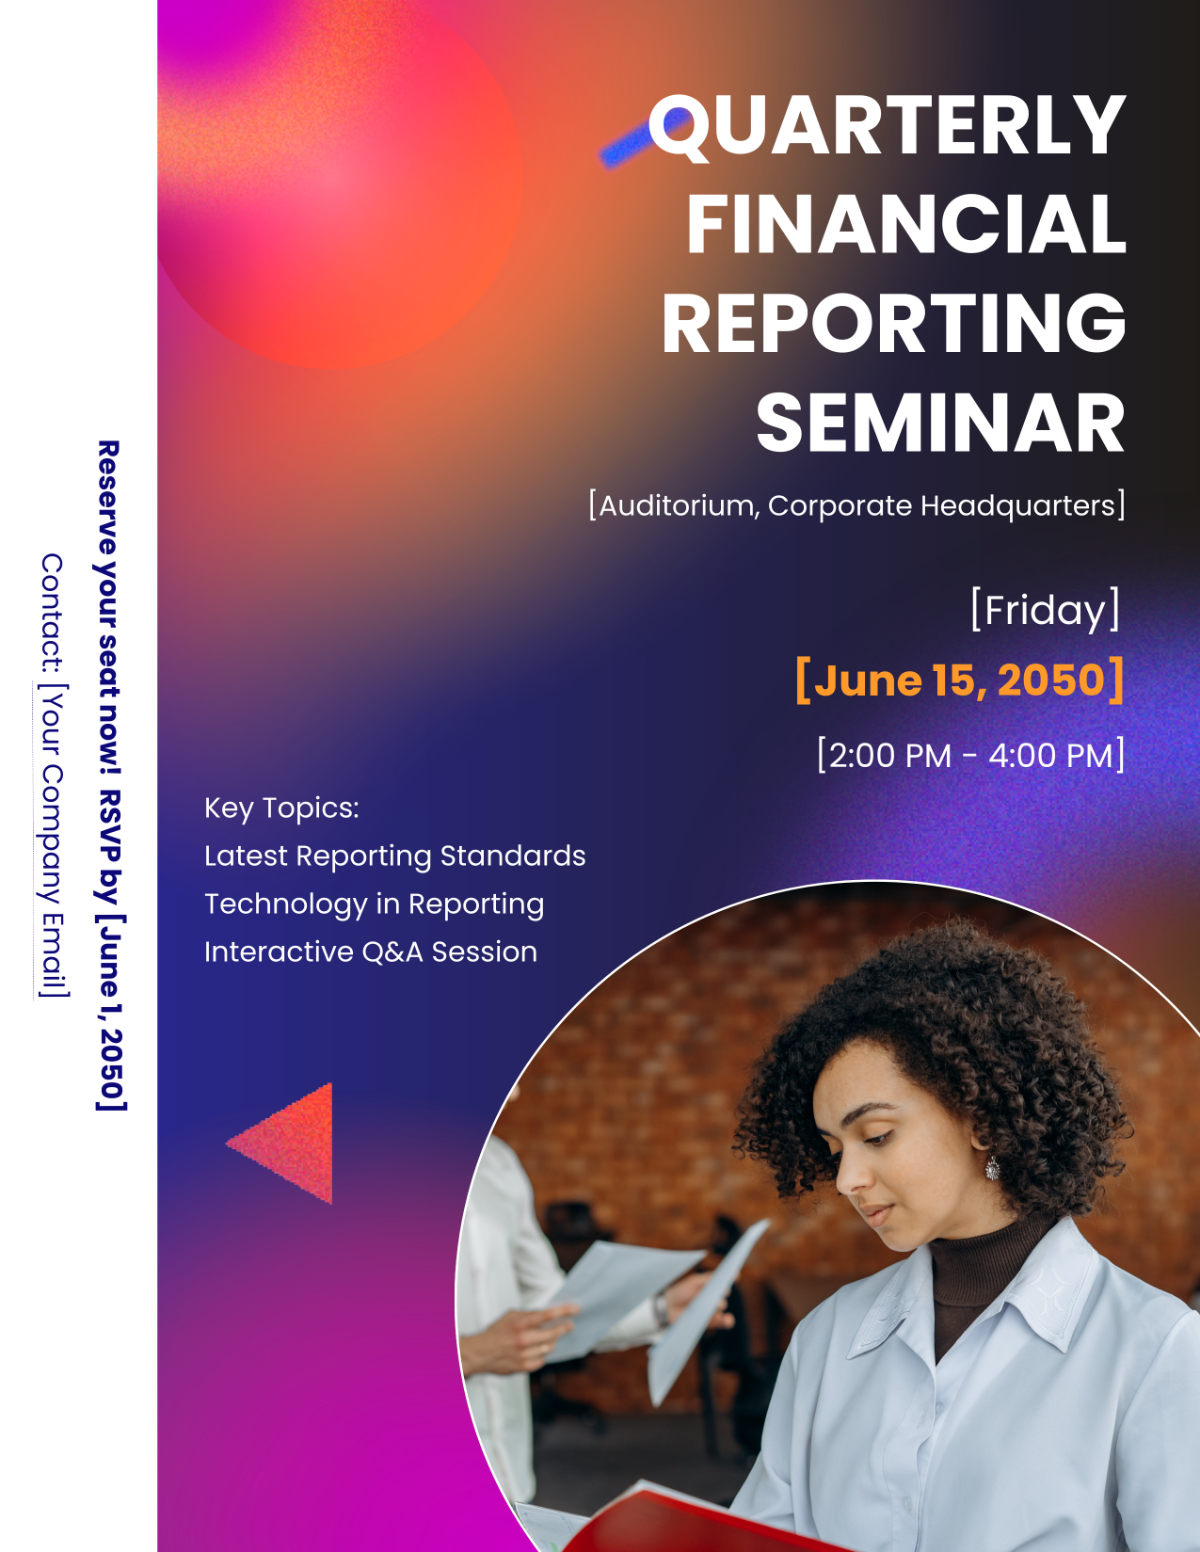 Quarterly Financial Reporting Seminar Flyer